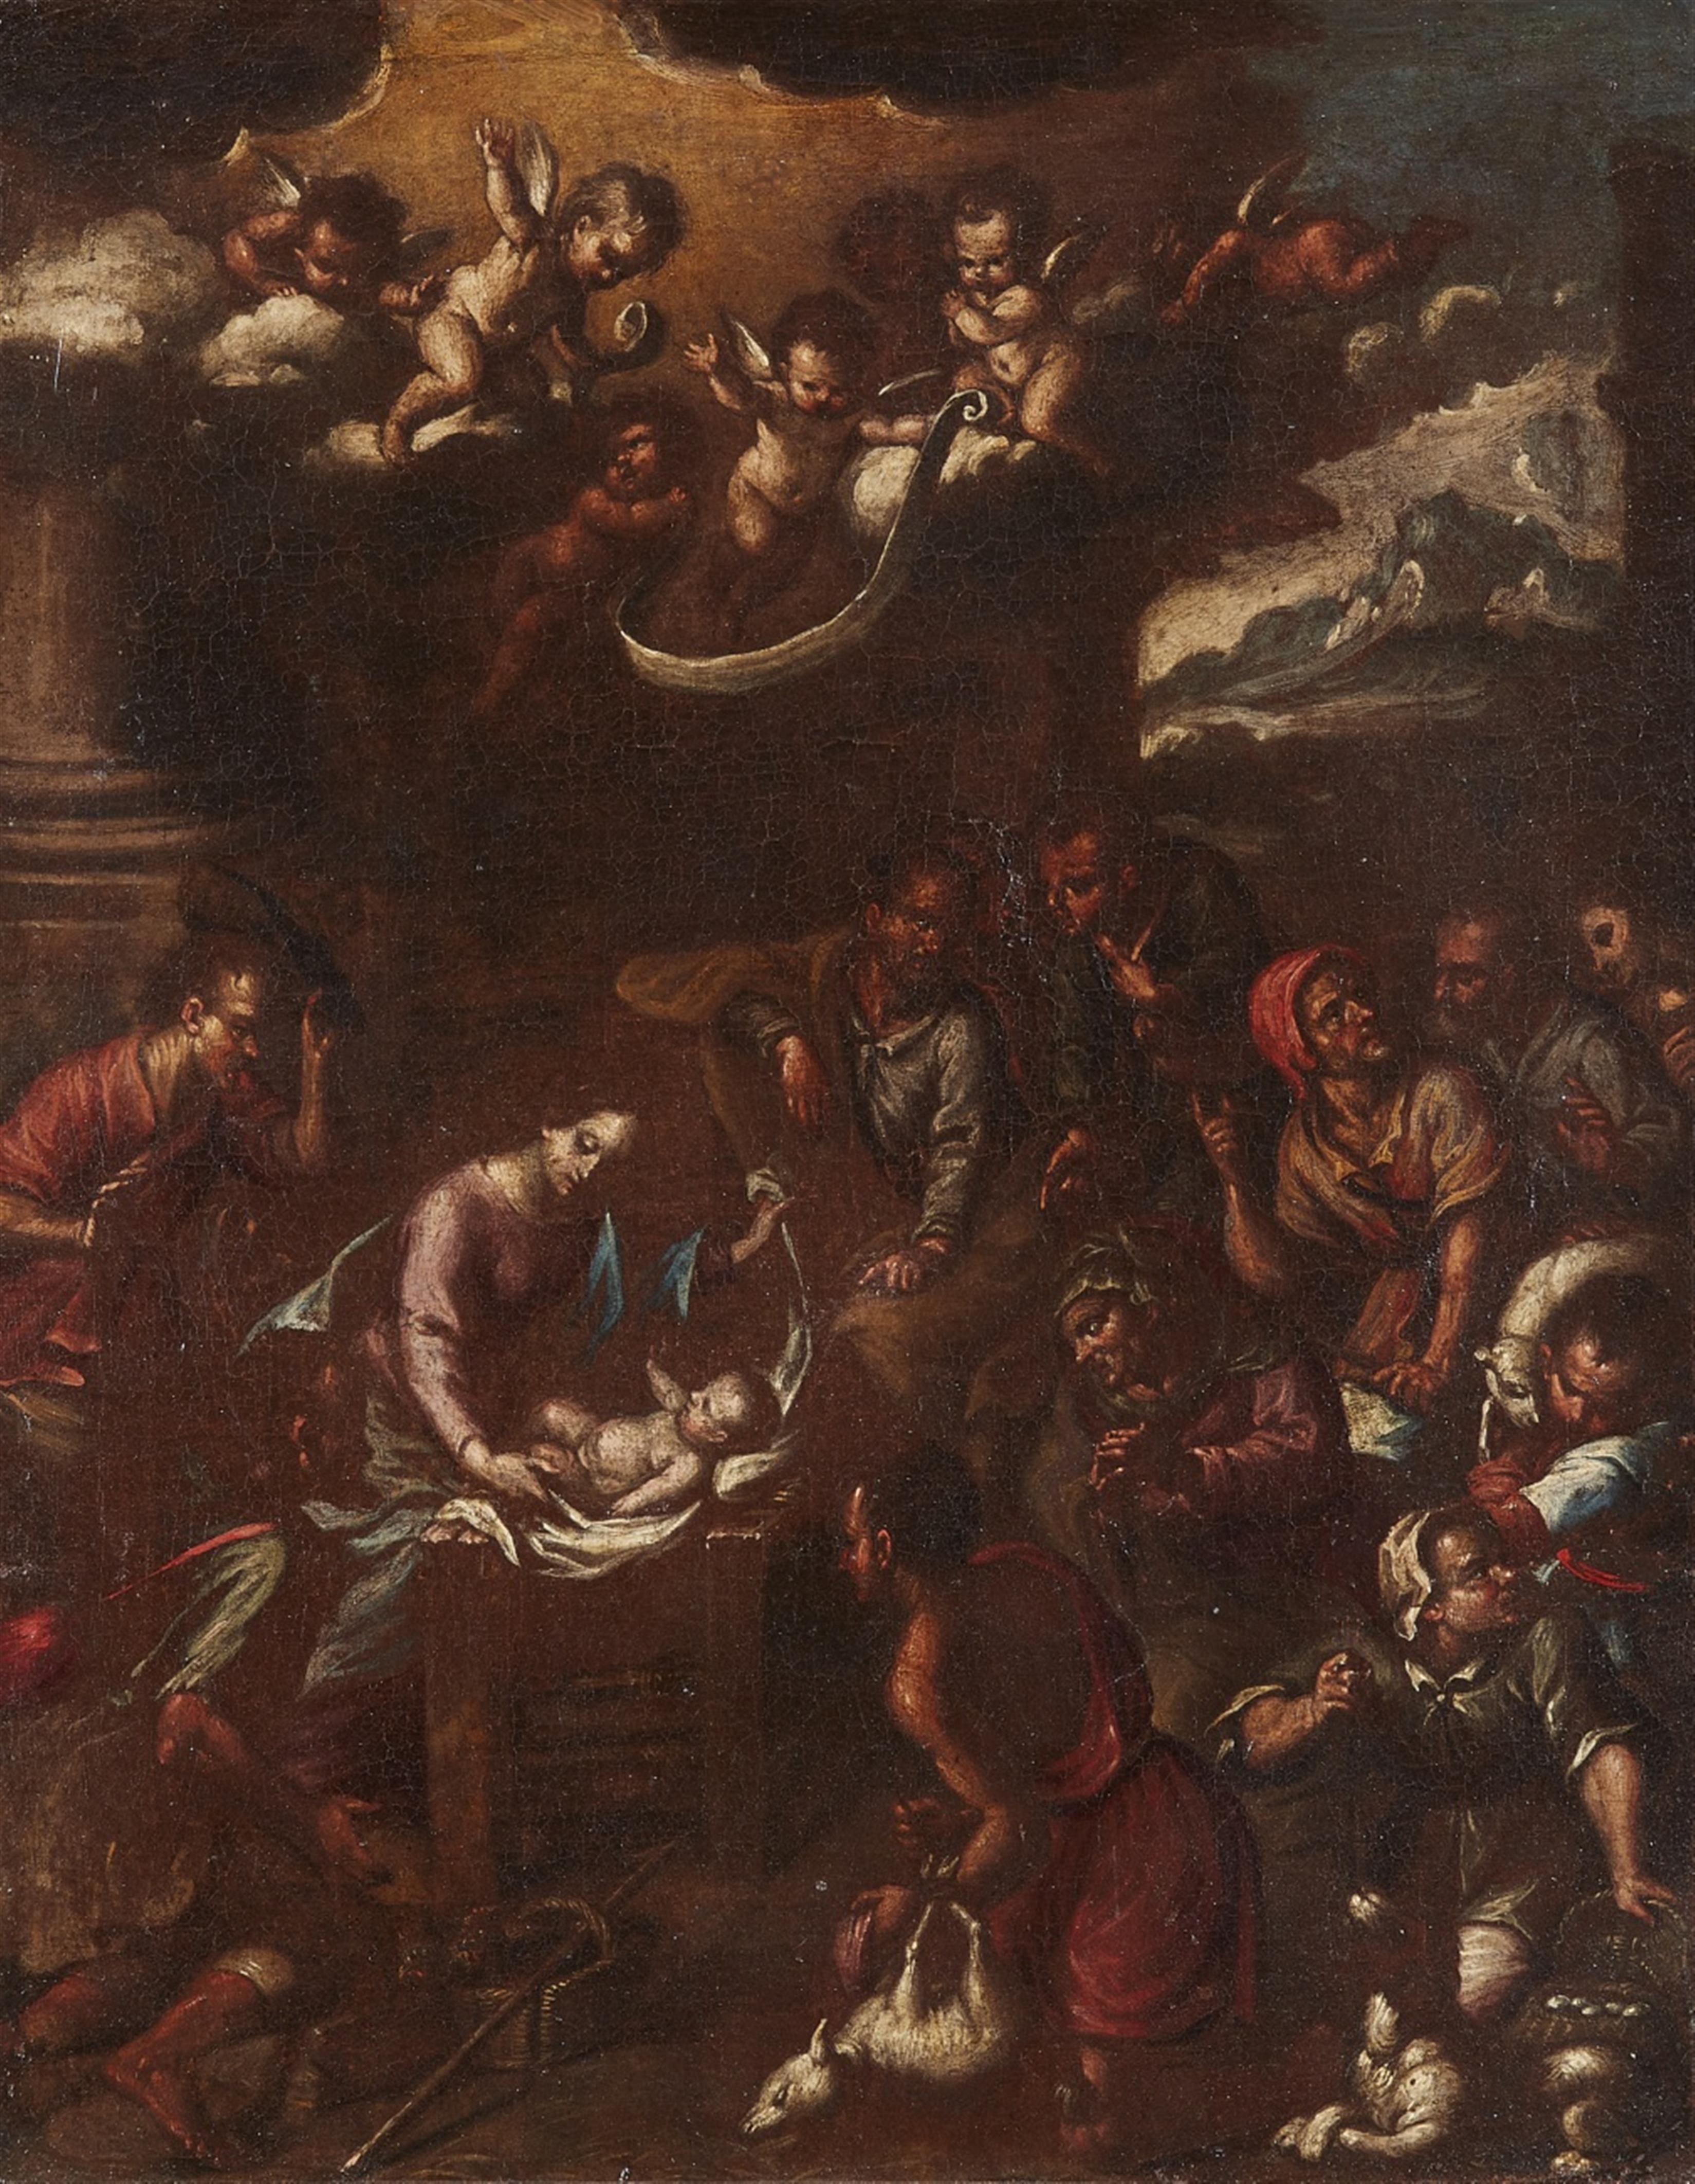 Venetian School around 1600 - The Adoration of the Shepherds - image-1